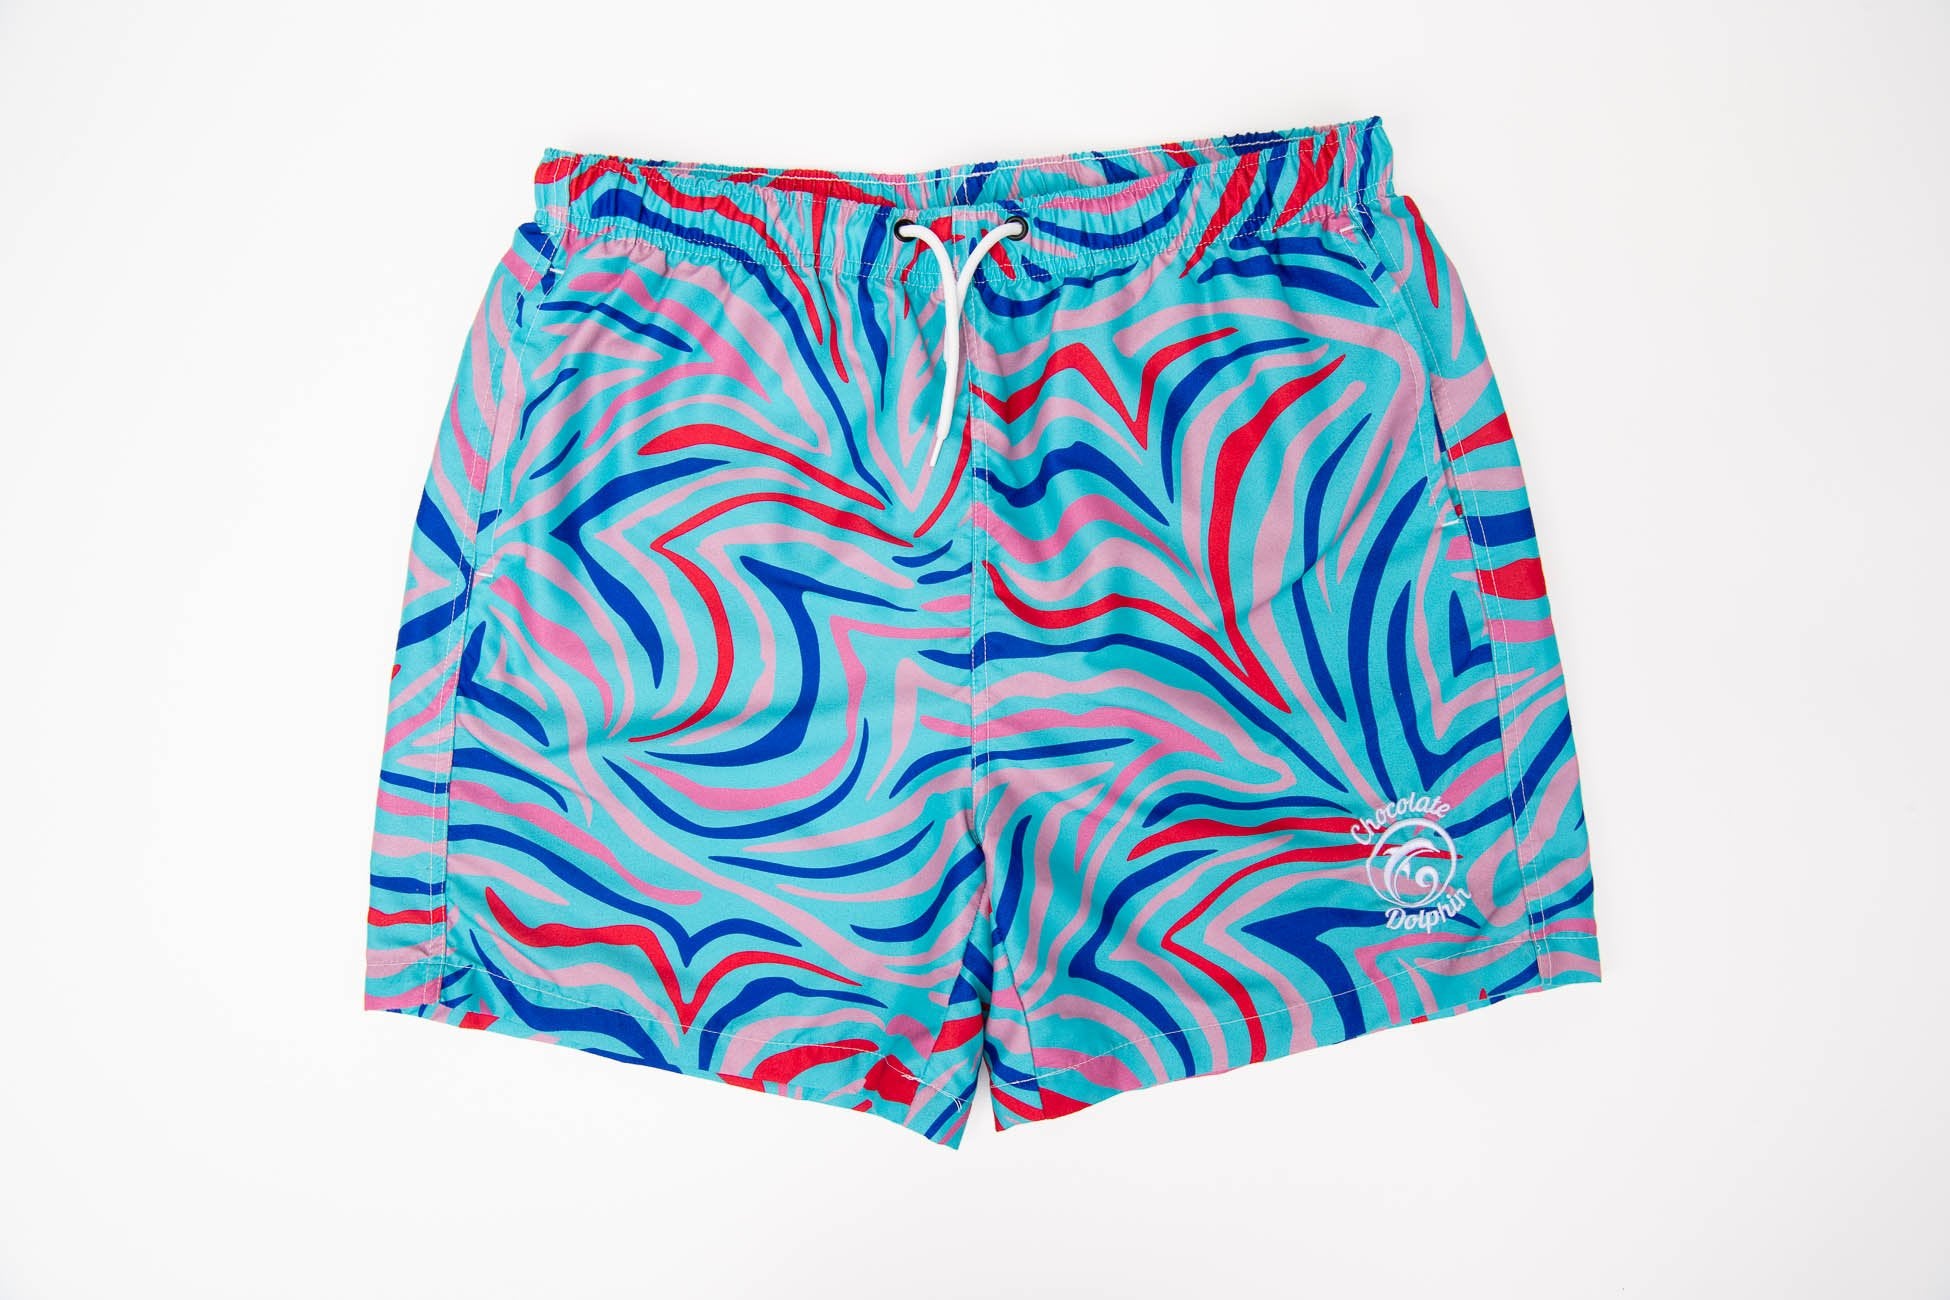 Aqua Blue/Red Swirl Swim Trunks